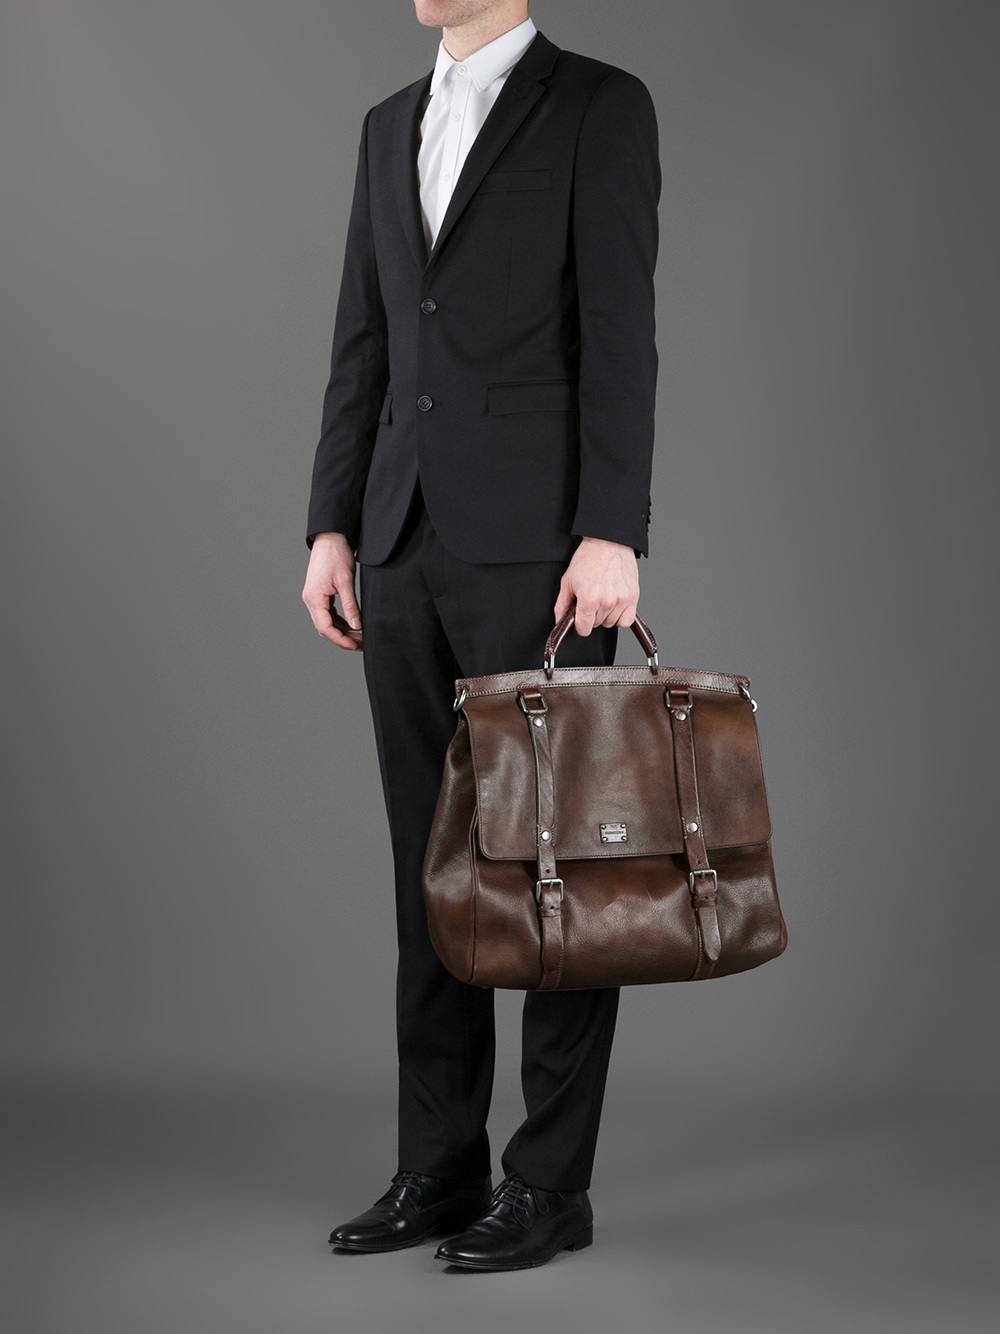 Dolce & Gabbana Sicily Weekender Bag in Brown for Men - Lyst